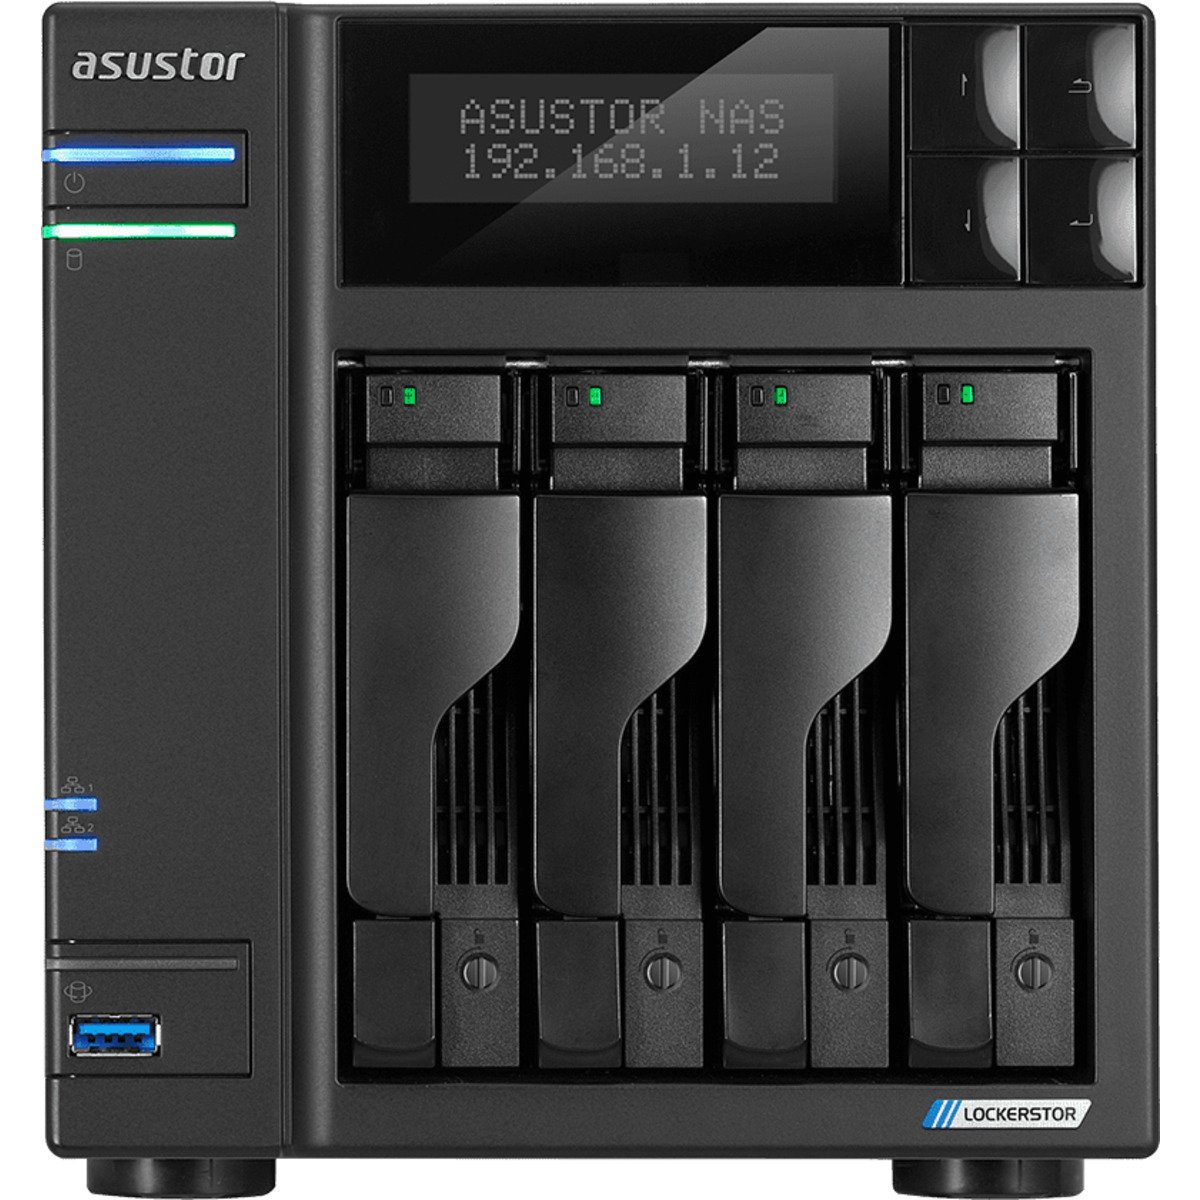 ASUSTOR AS6604T Lockerstor 4 32tb 4-Bay Desktop Multimedia / Power User / Business NAS - Network Attached Storage Device 4x8tb Western Digital Gold WD8004FRYZ 3.5 7200rpm SATA 6Gb/s HDD ENTERPRISE Class Drives Installed - Burn-In Tested - FREE RAM UPGRADE AS6604T Lockerstor 4